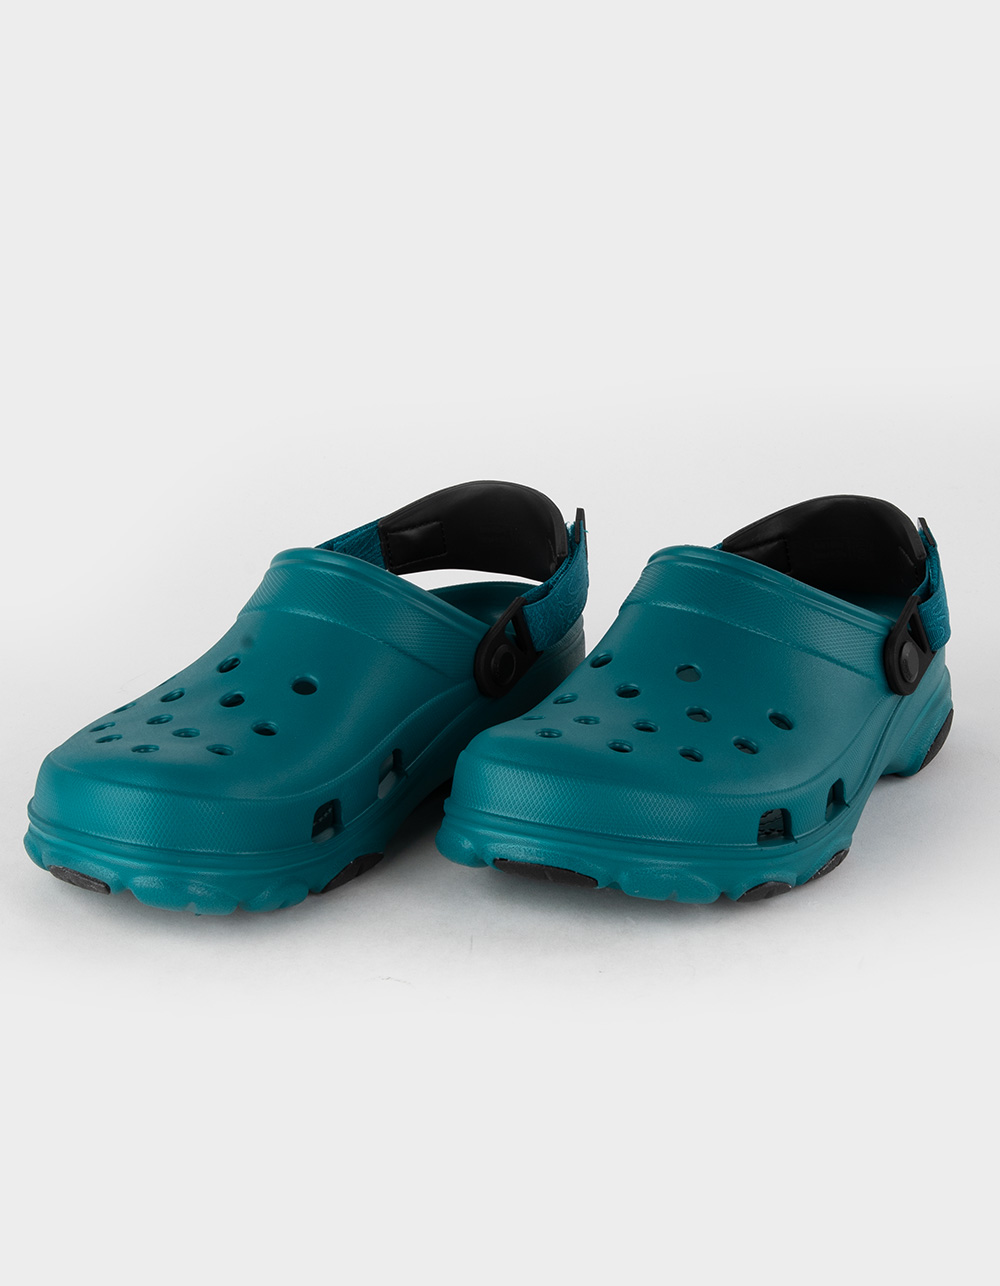 Dark Turquoise Crocs | 360kenya.com